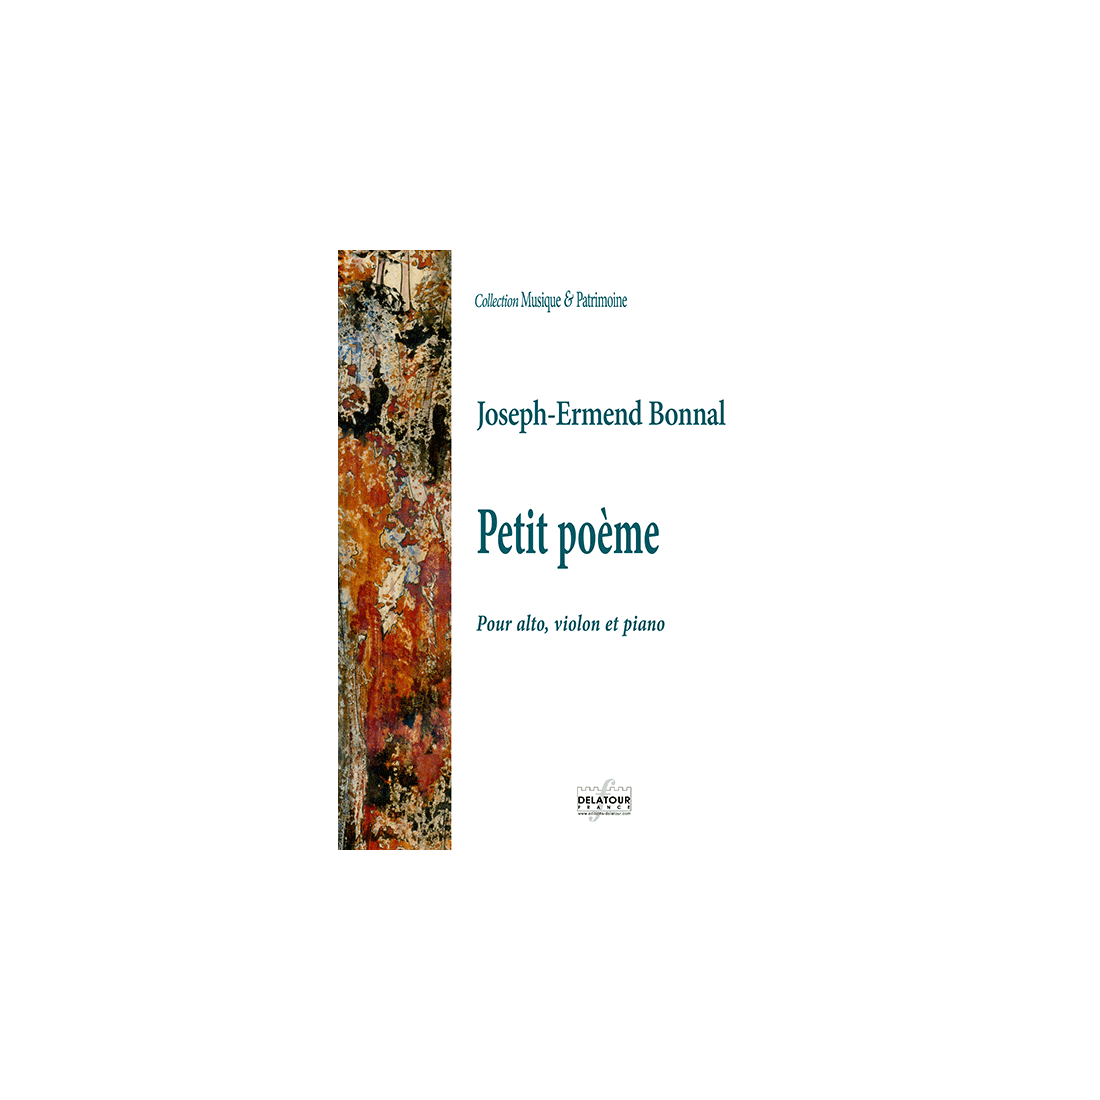 Petit poème for violin, viola and piano